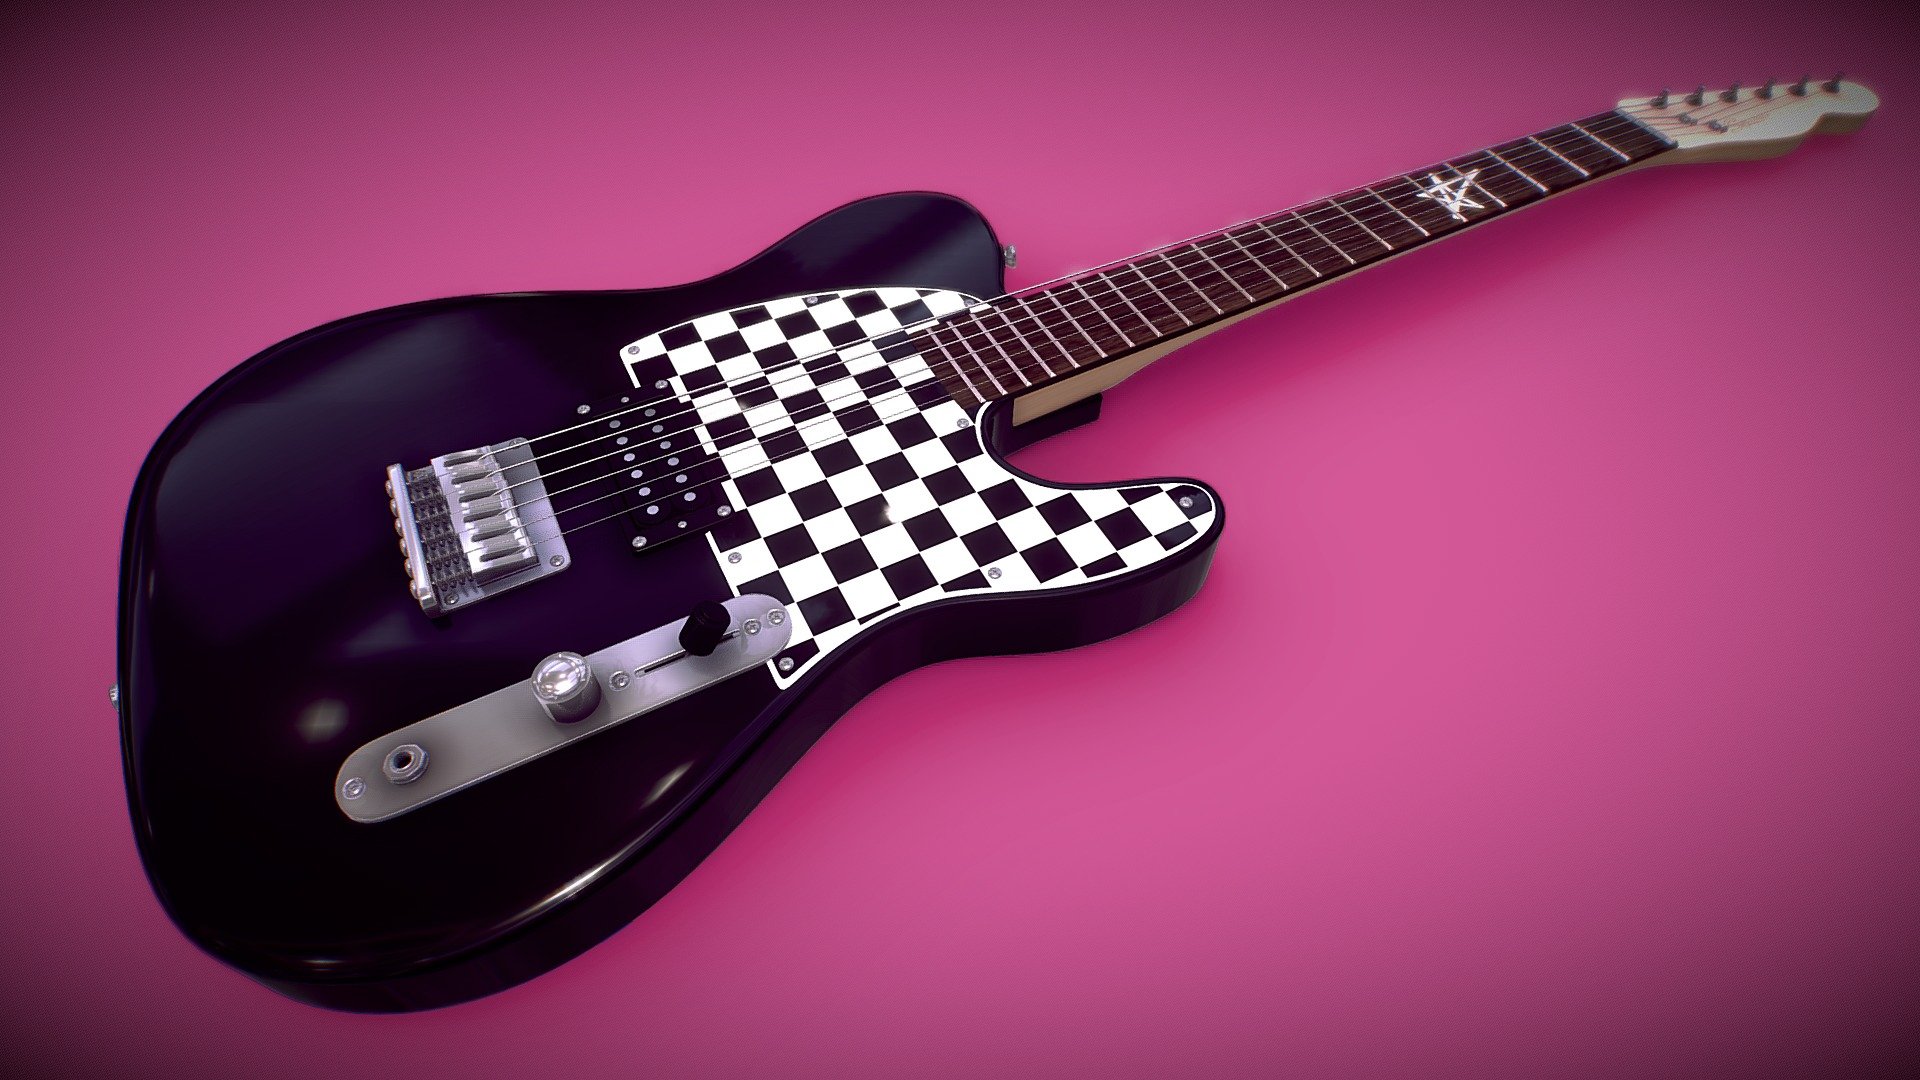 Fender Squier Telecaster Avril Lavigne Signature - Download Free